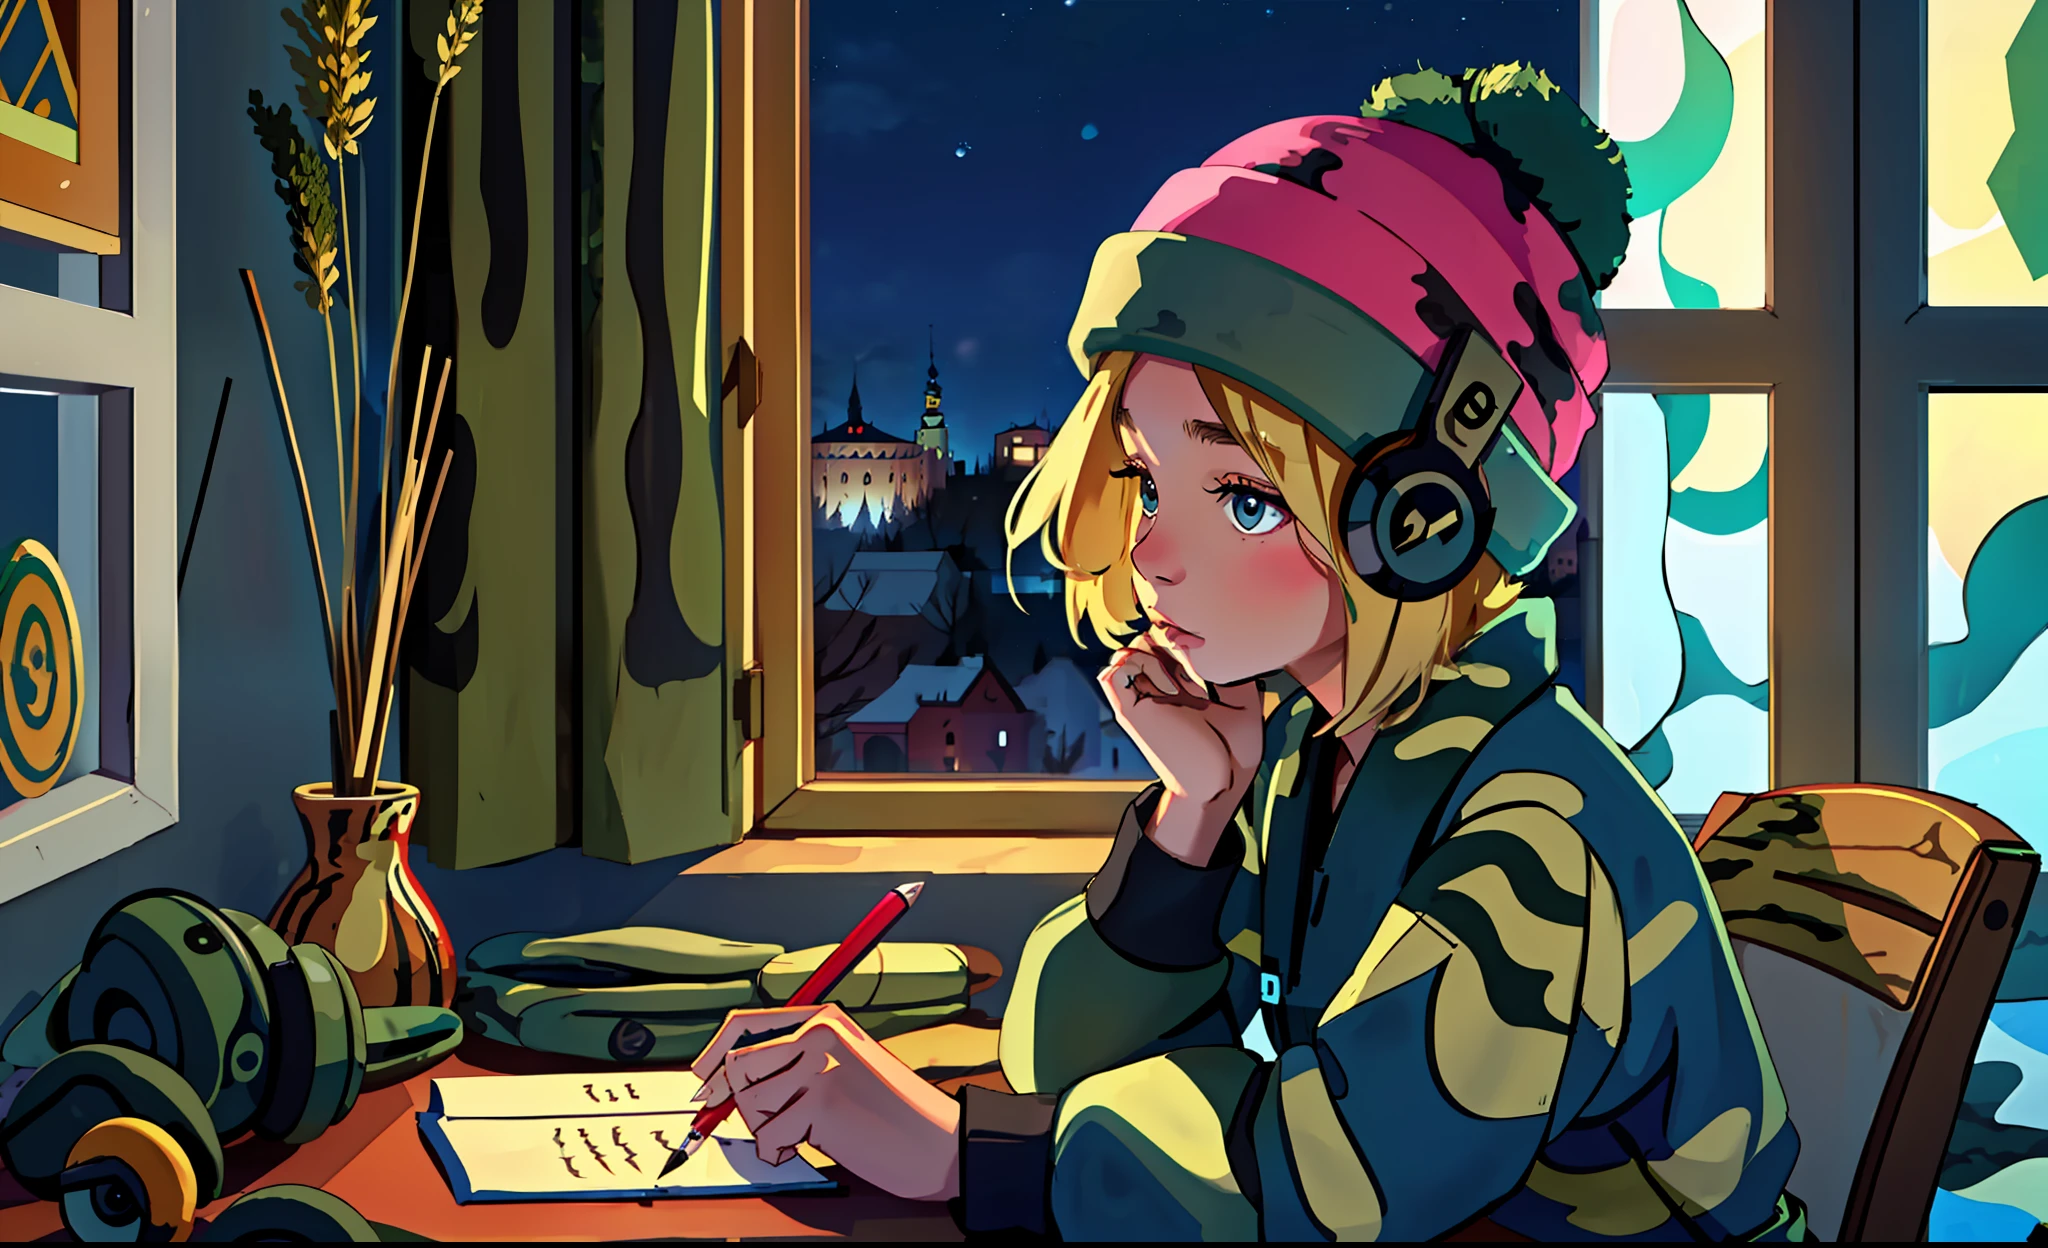 lofiestudiar, 1 chica, escribiendo, Oblicuo, sereno/(pokemon\), pelo rubio, cabello corto, Auriculares, gorro, uniforme de camuflaje, ventana, Ucrania Antecedentes, noche